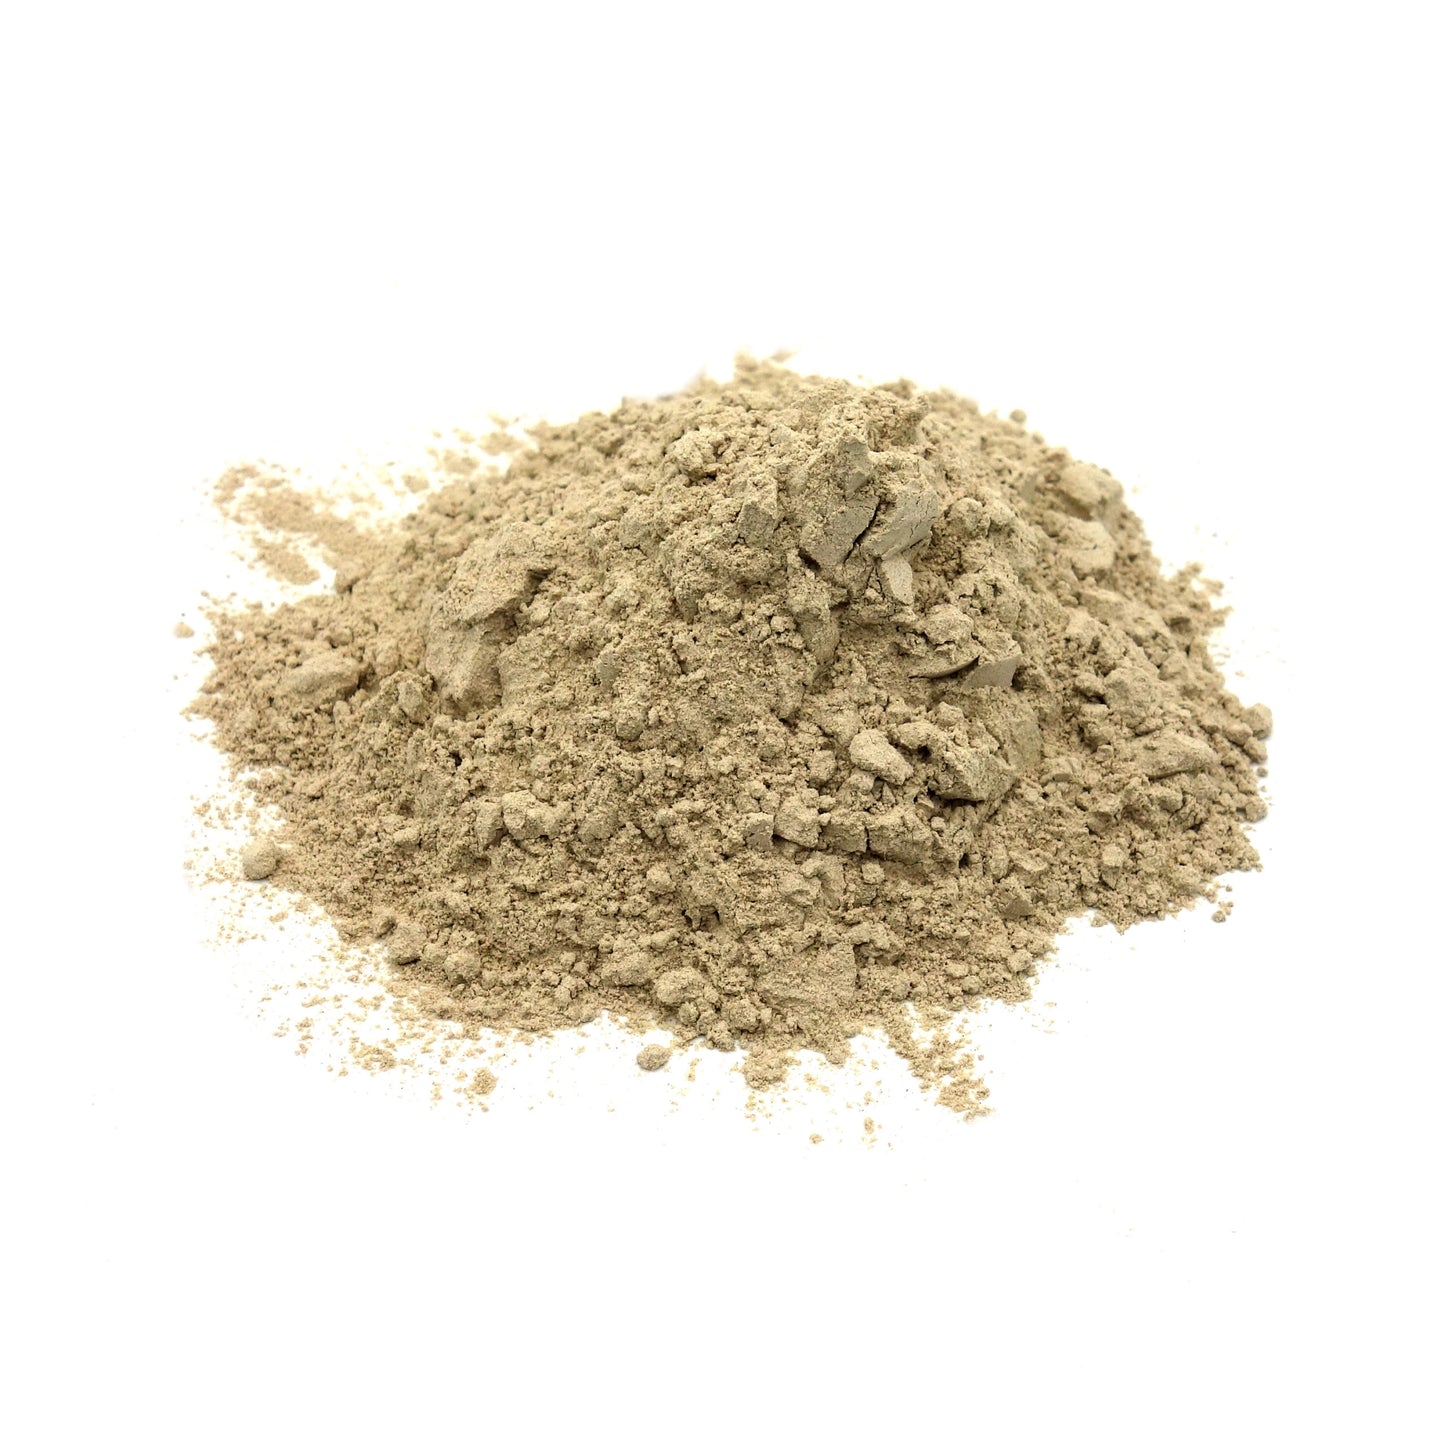 Irish Sea Moss powder